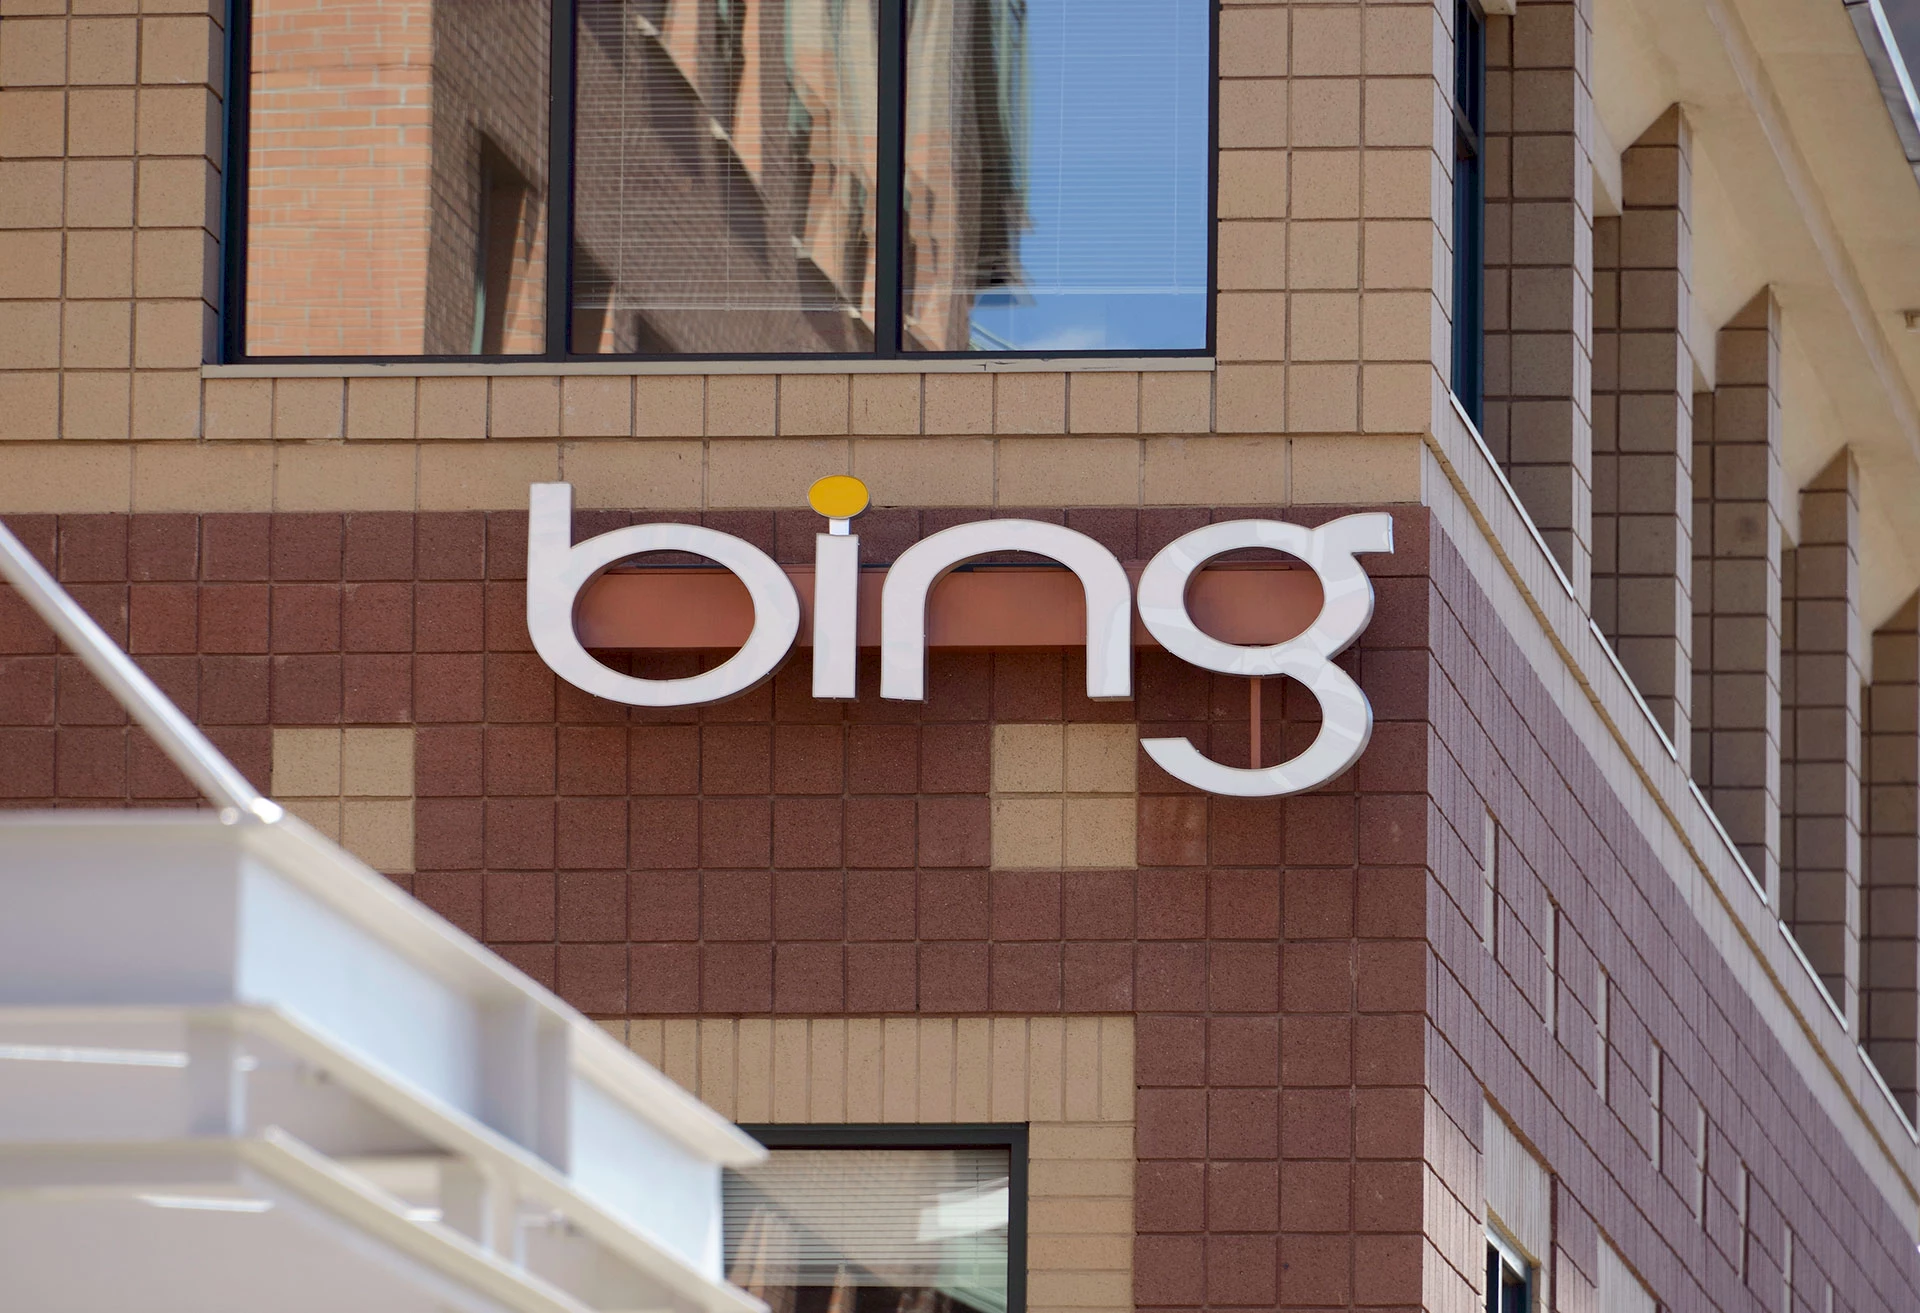 Bing, Boulder, Colorado, USA.